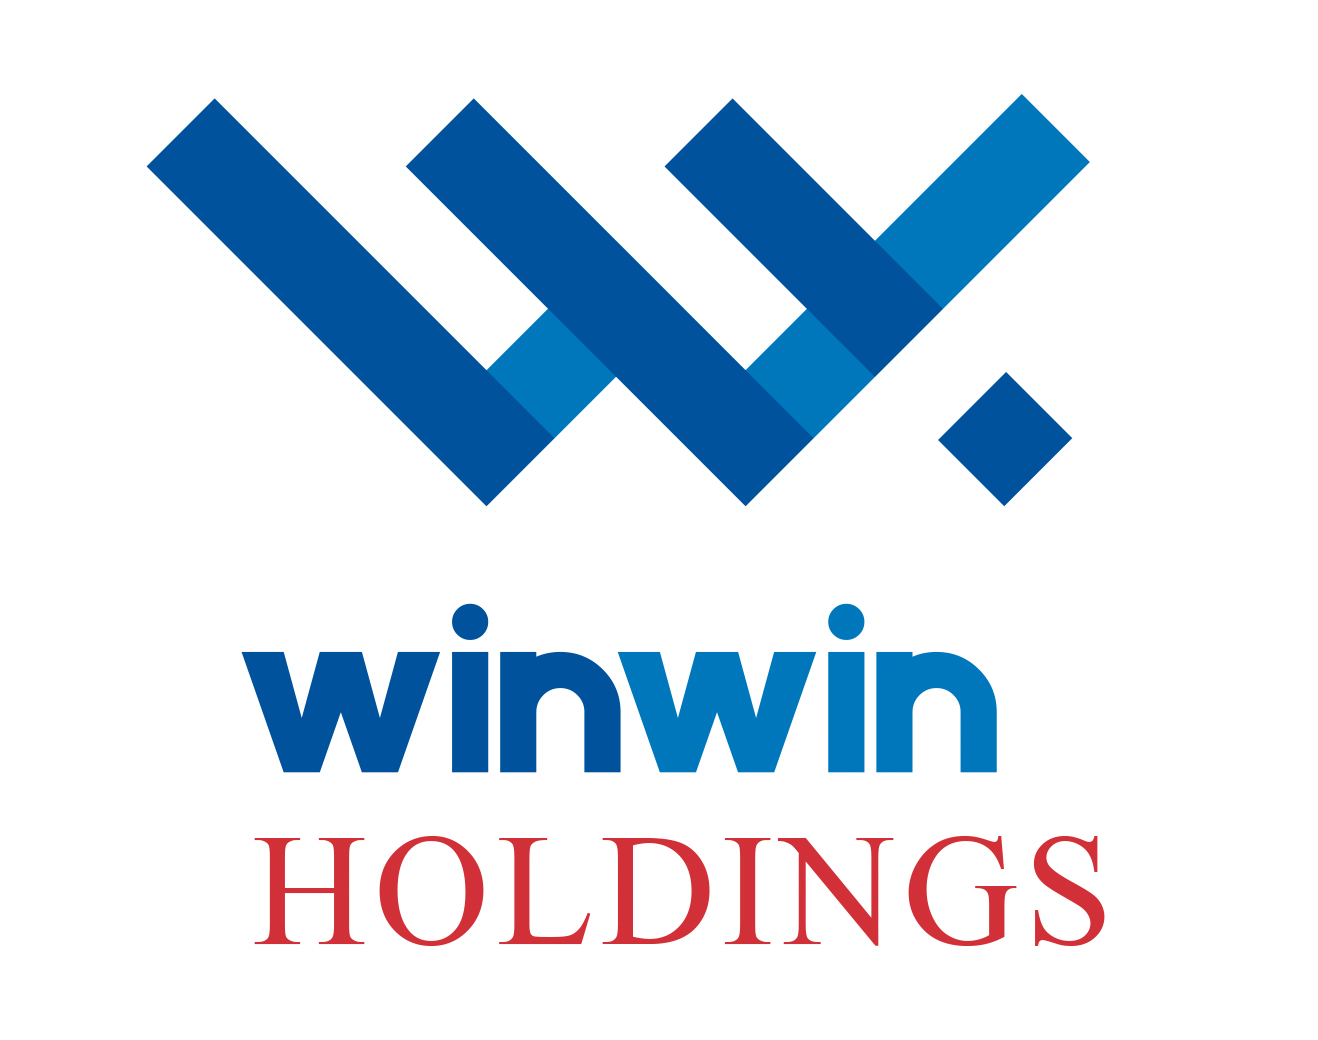 WINWIN logo